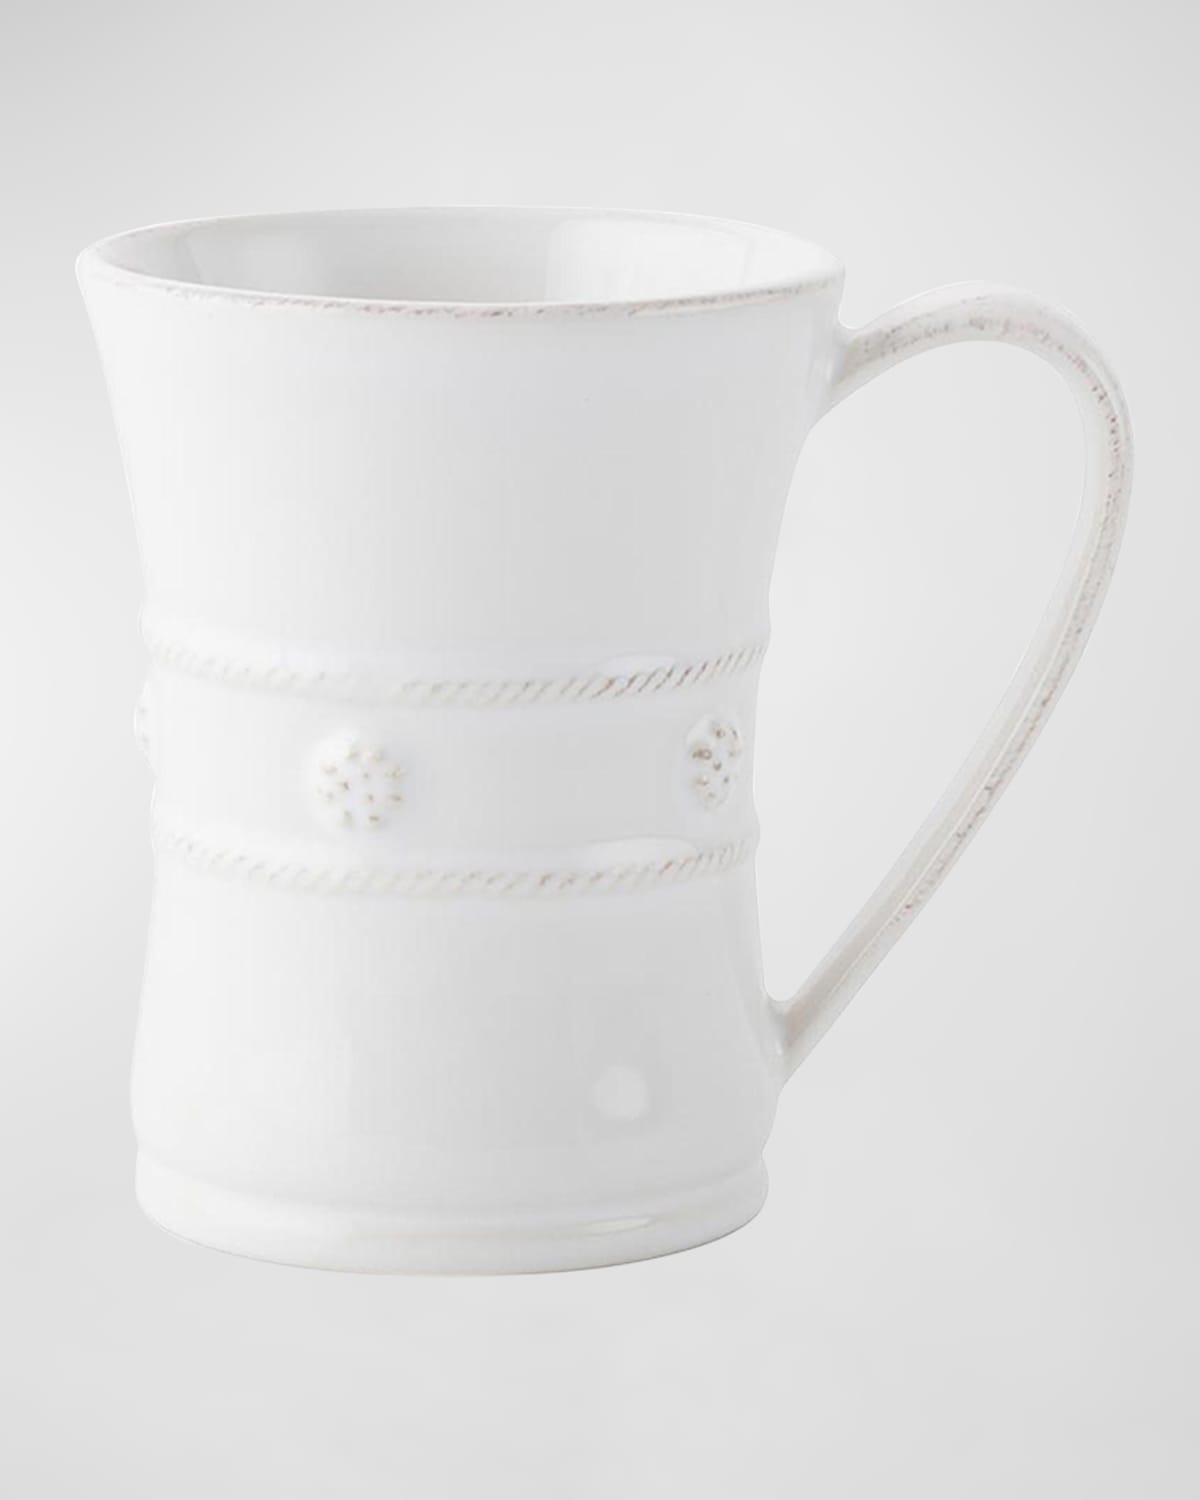 Berry & Thread Travel Mug with Silicone Lid - Whitewash